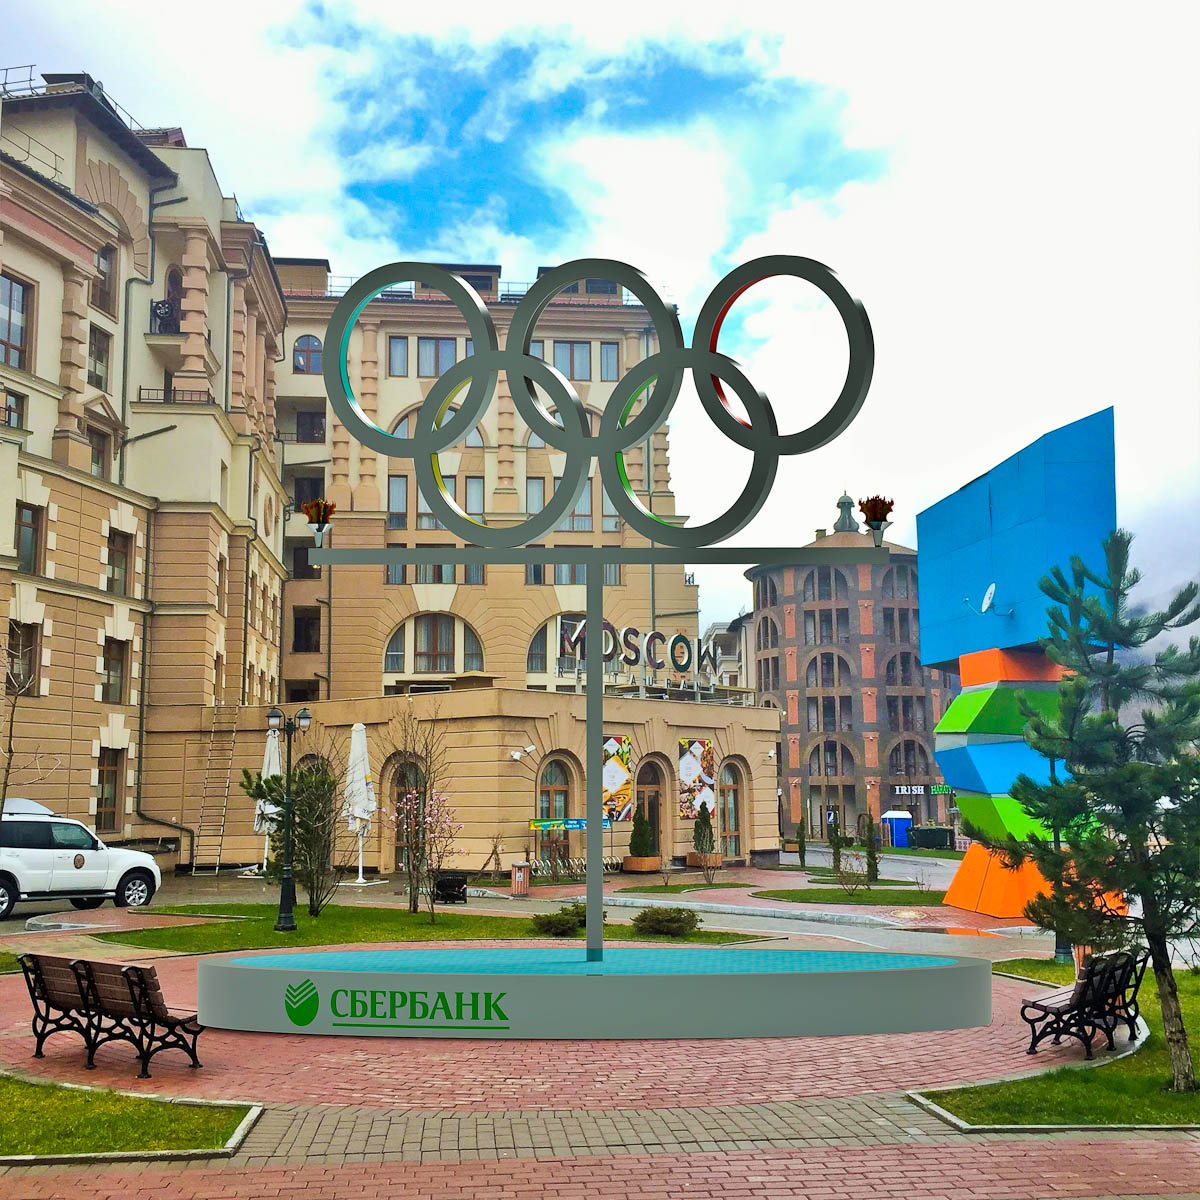 Sochi Olympic Rings